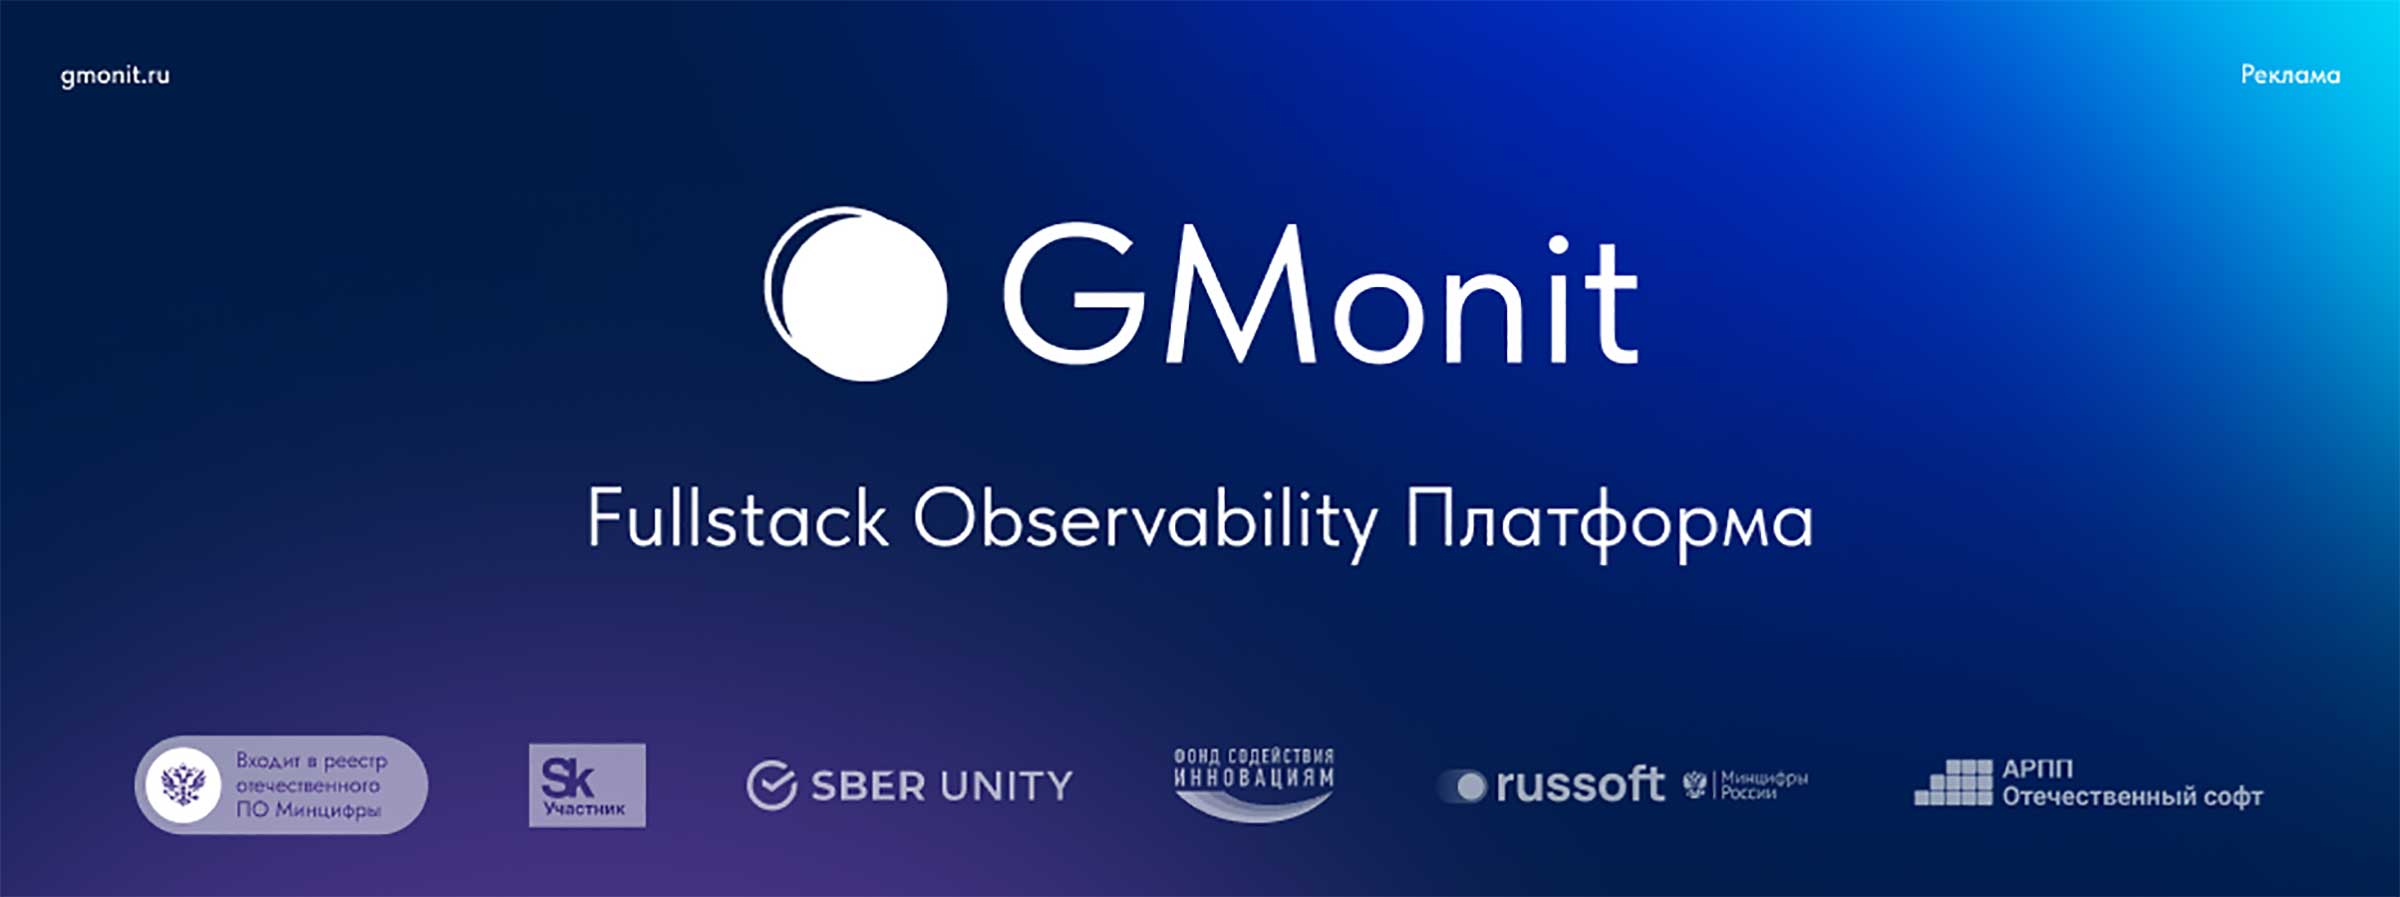 GMonit – платформа fullstack мониторинга